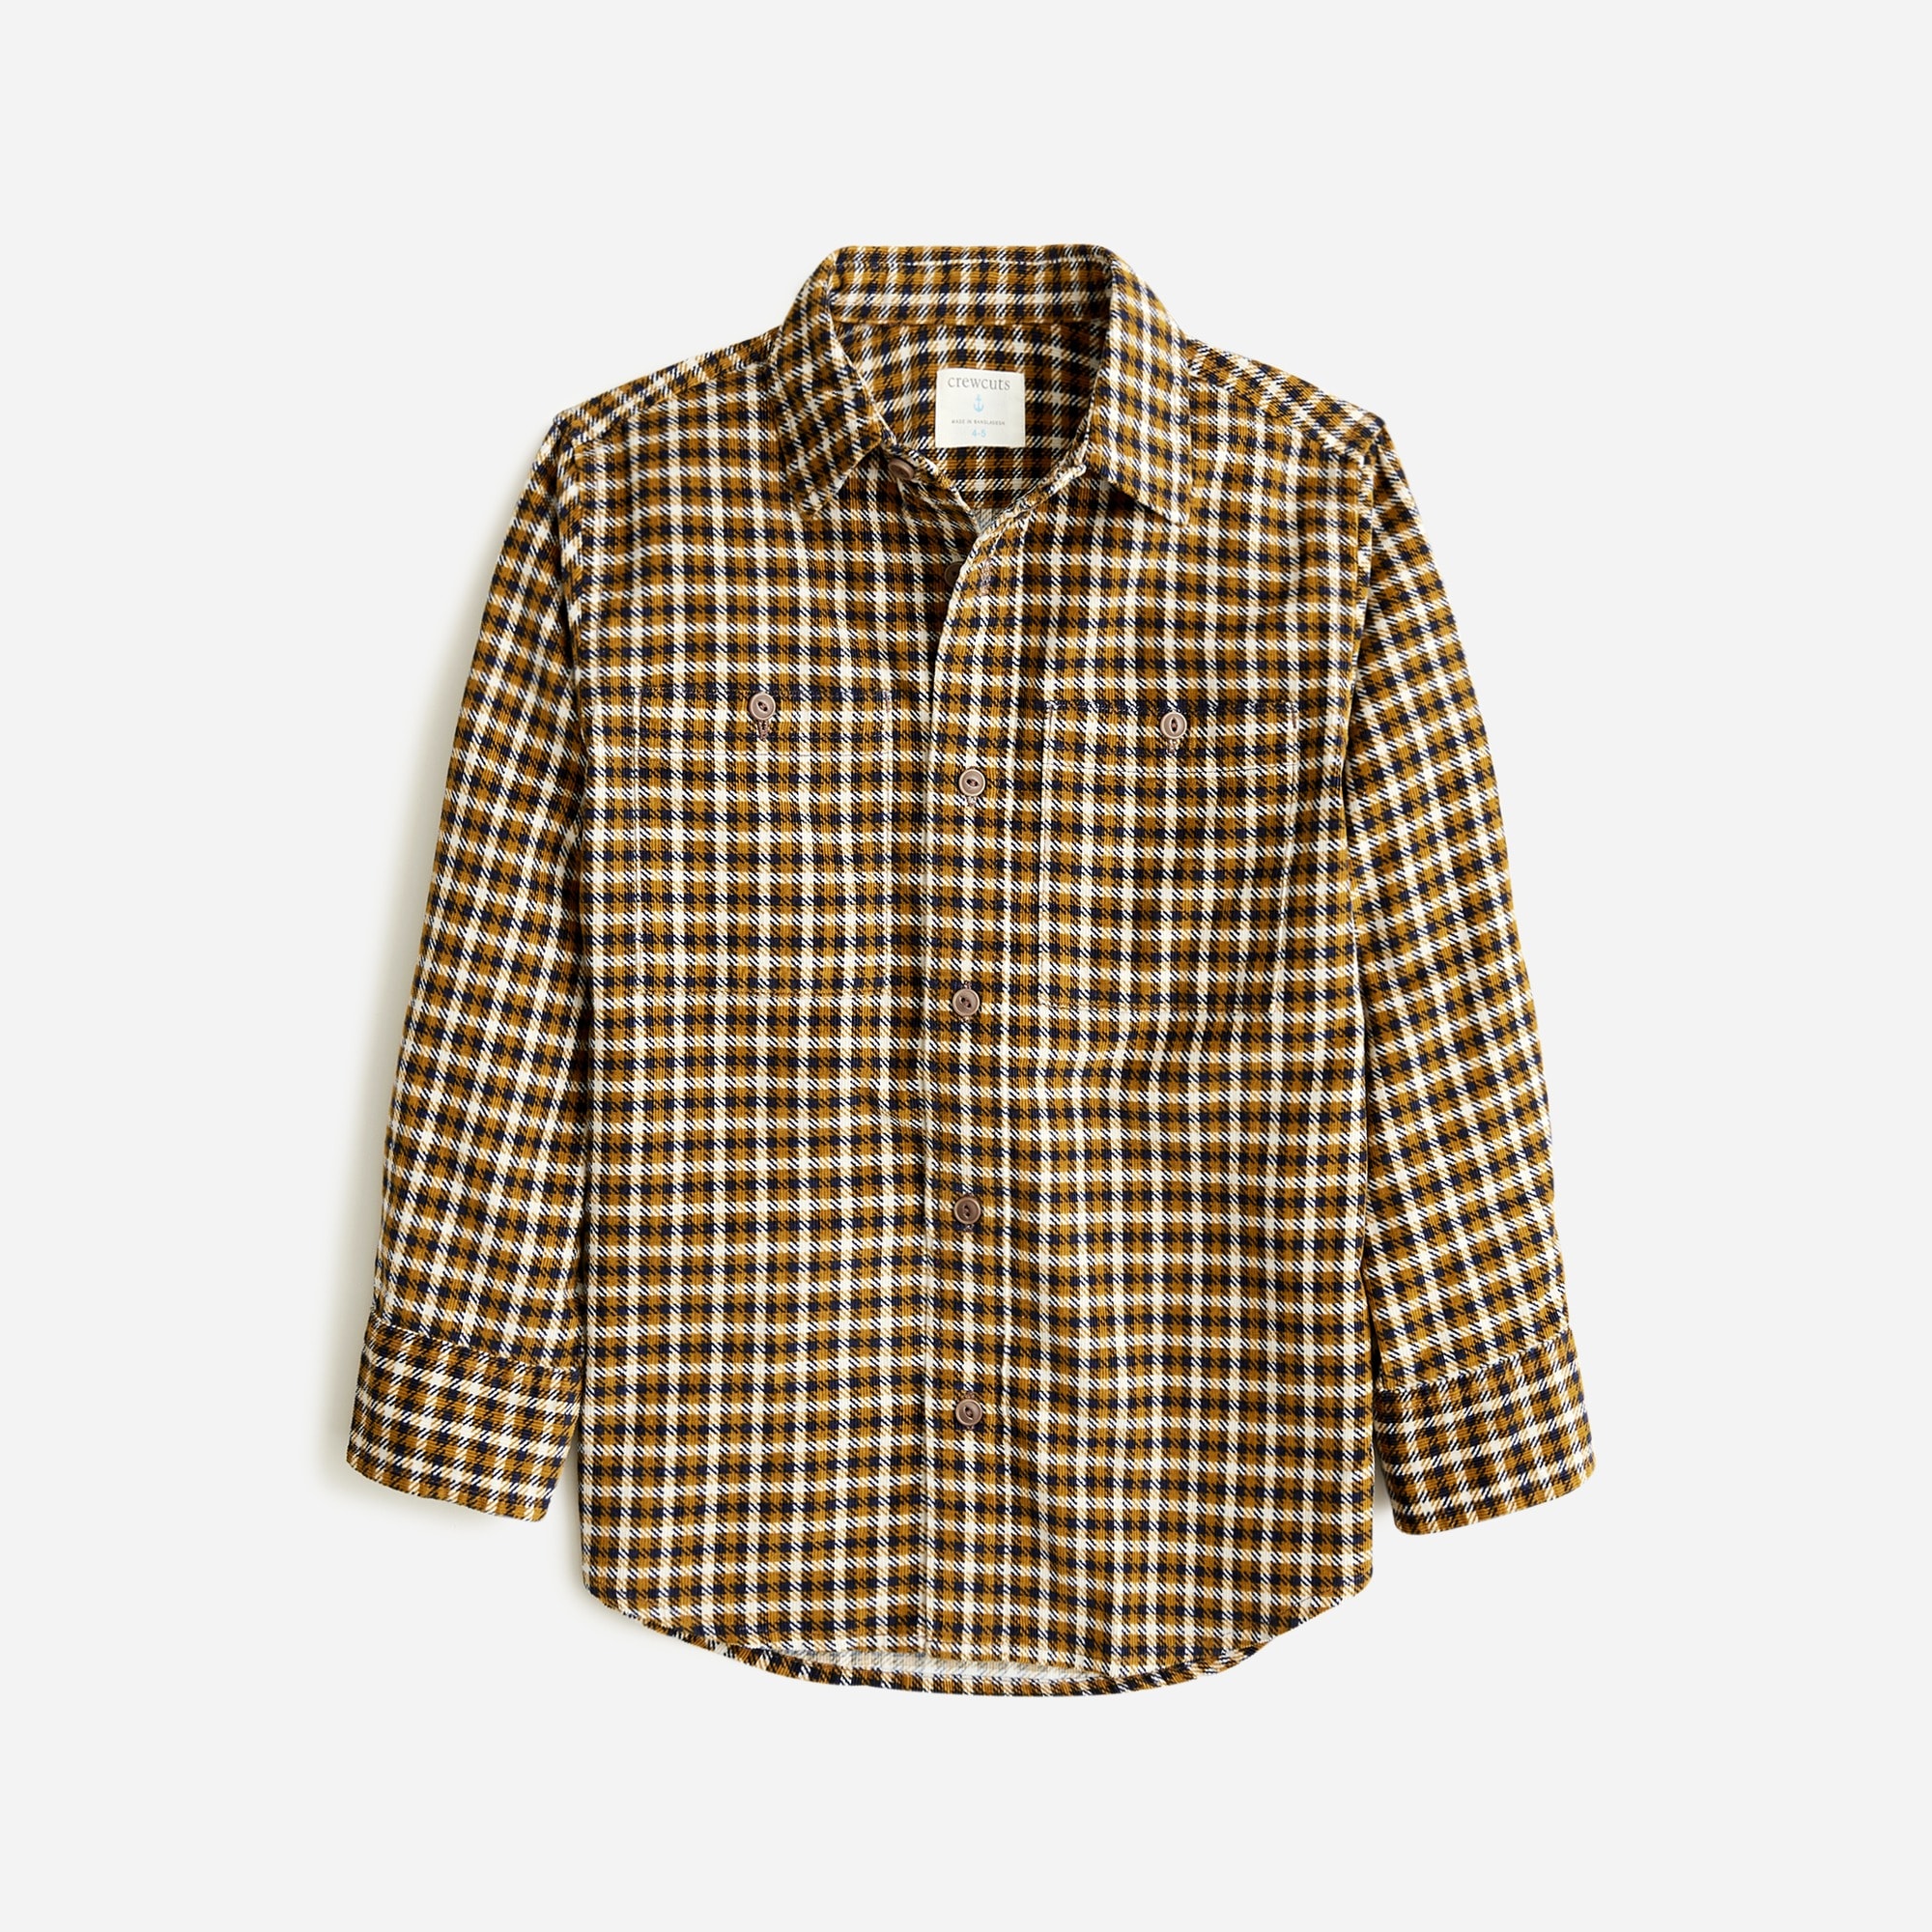  Wide-wale corduroy shirt-jacket in plaid